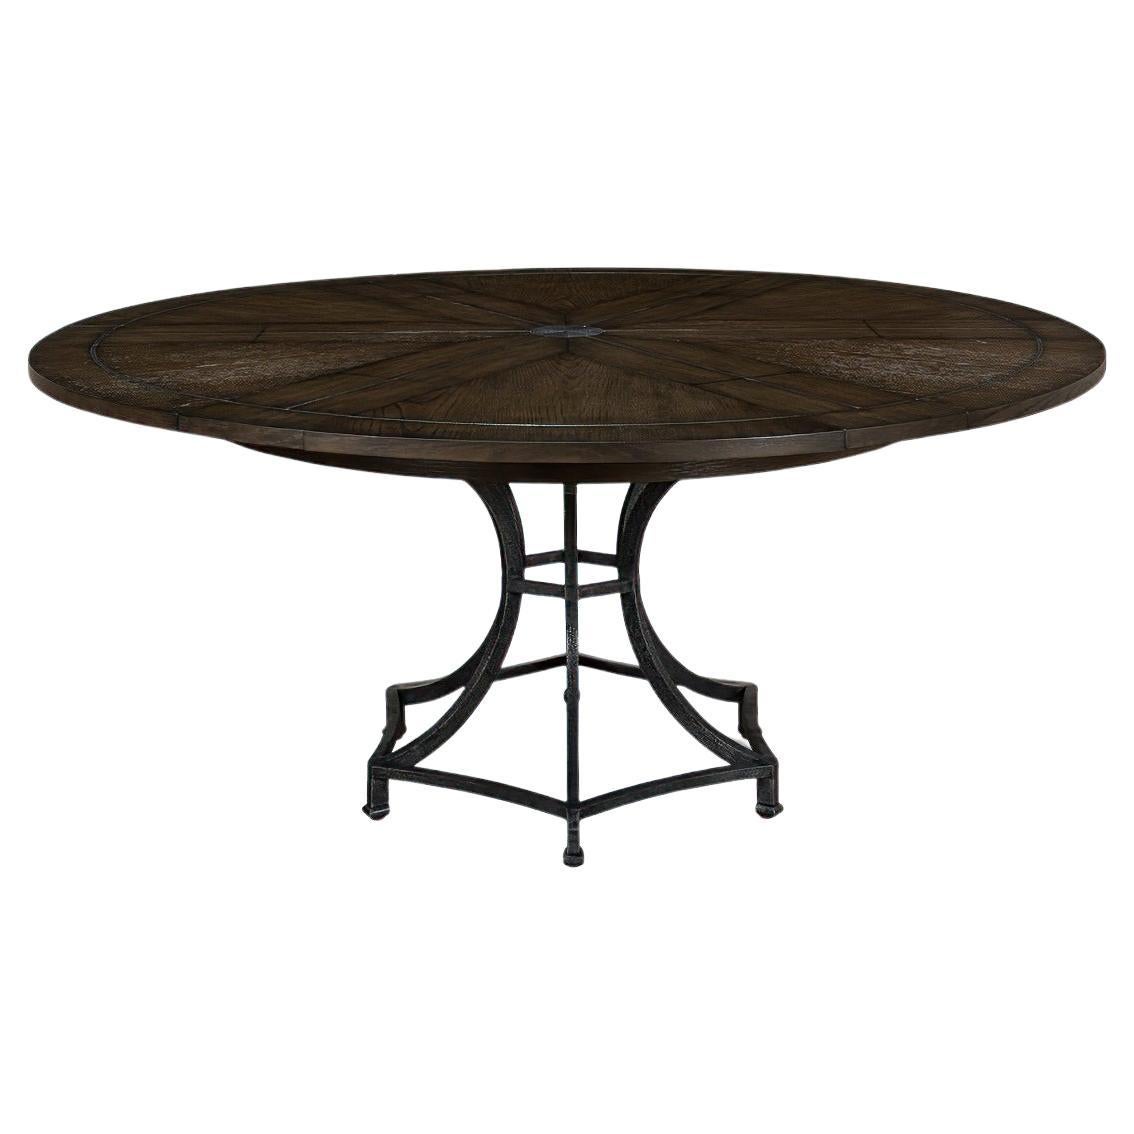 Modern Industrial Round Dining Table, Dark Oak